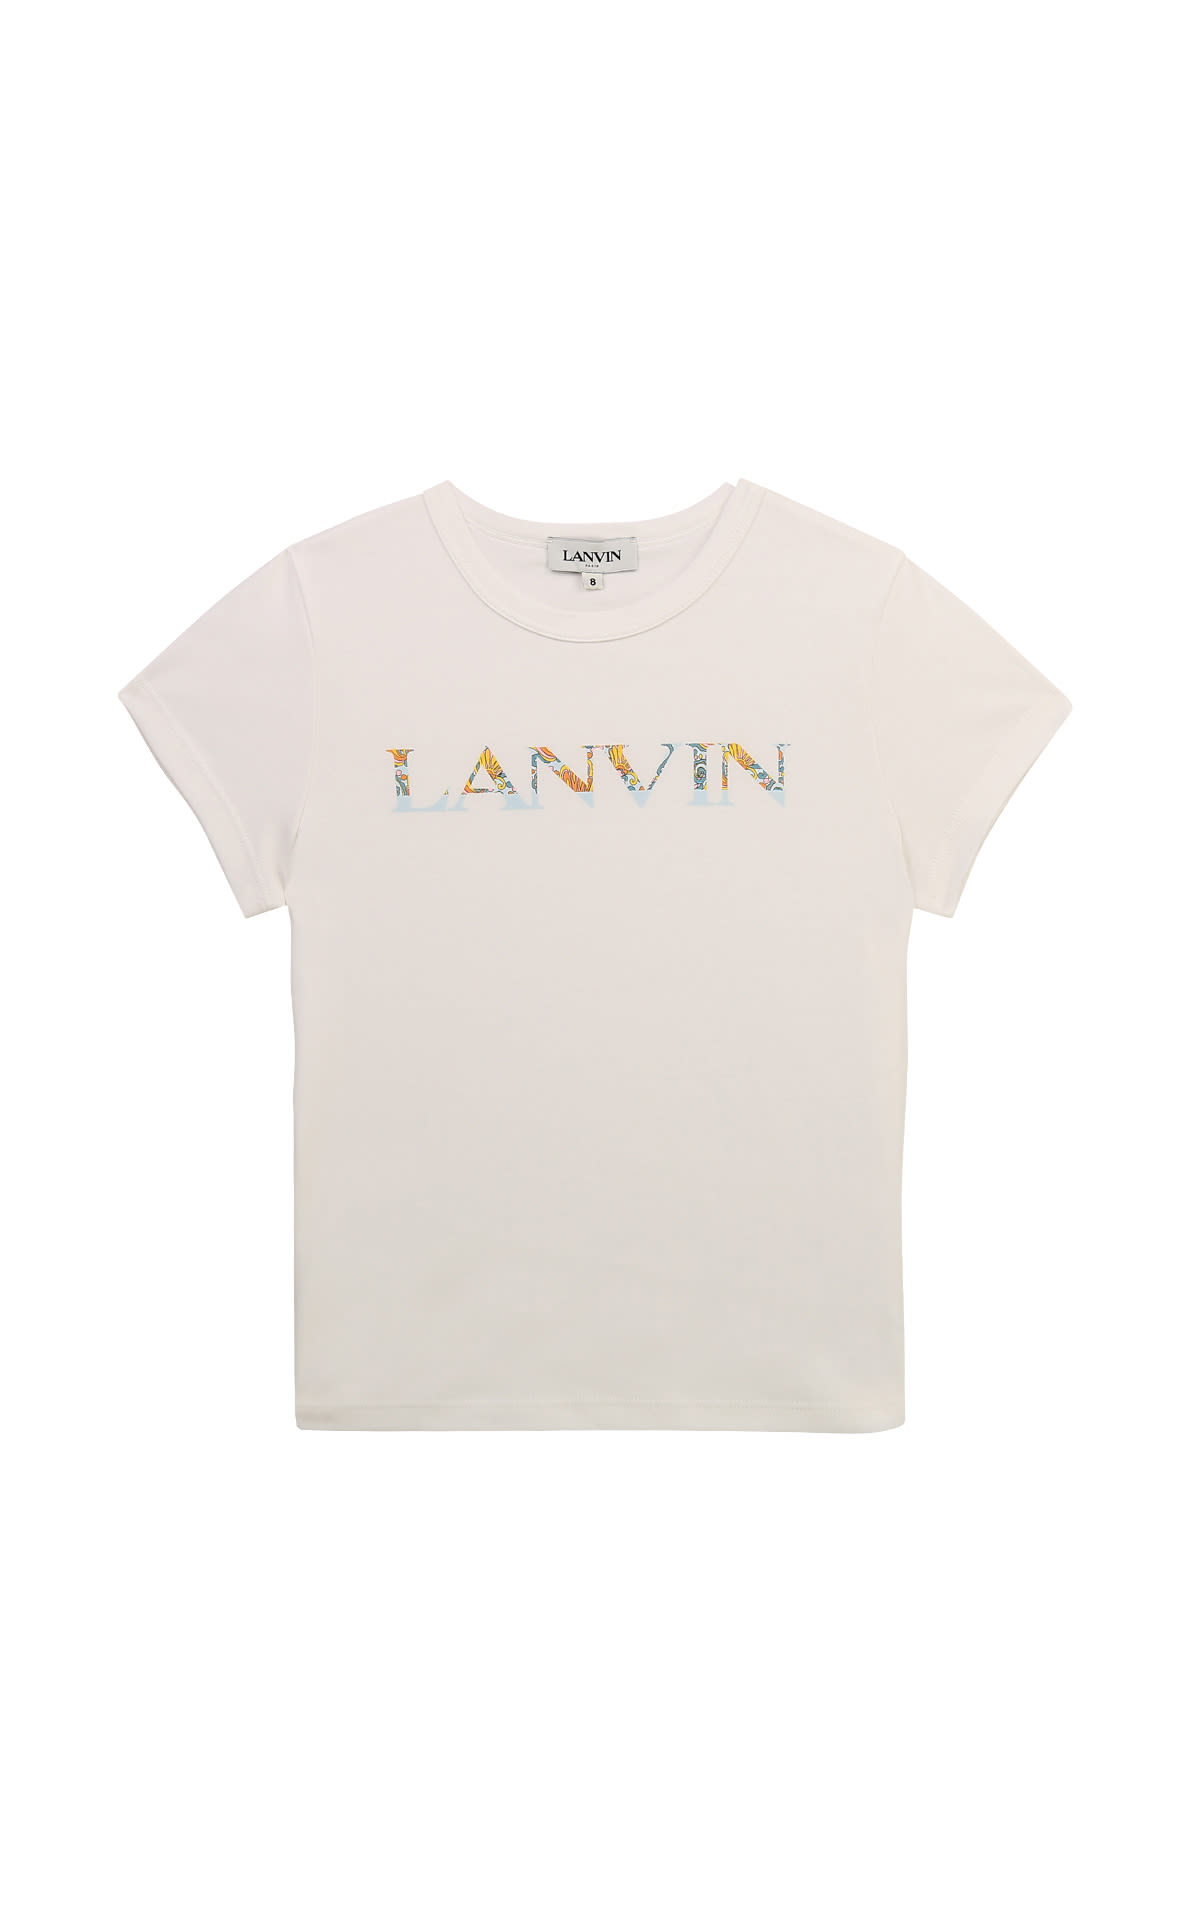 Kids around Lanvin short sleeve t-shirt La Vallée Village